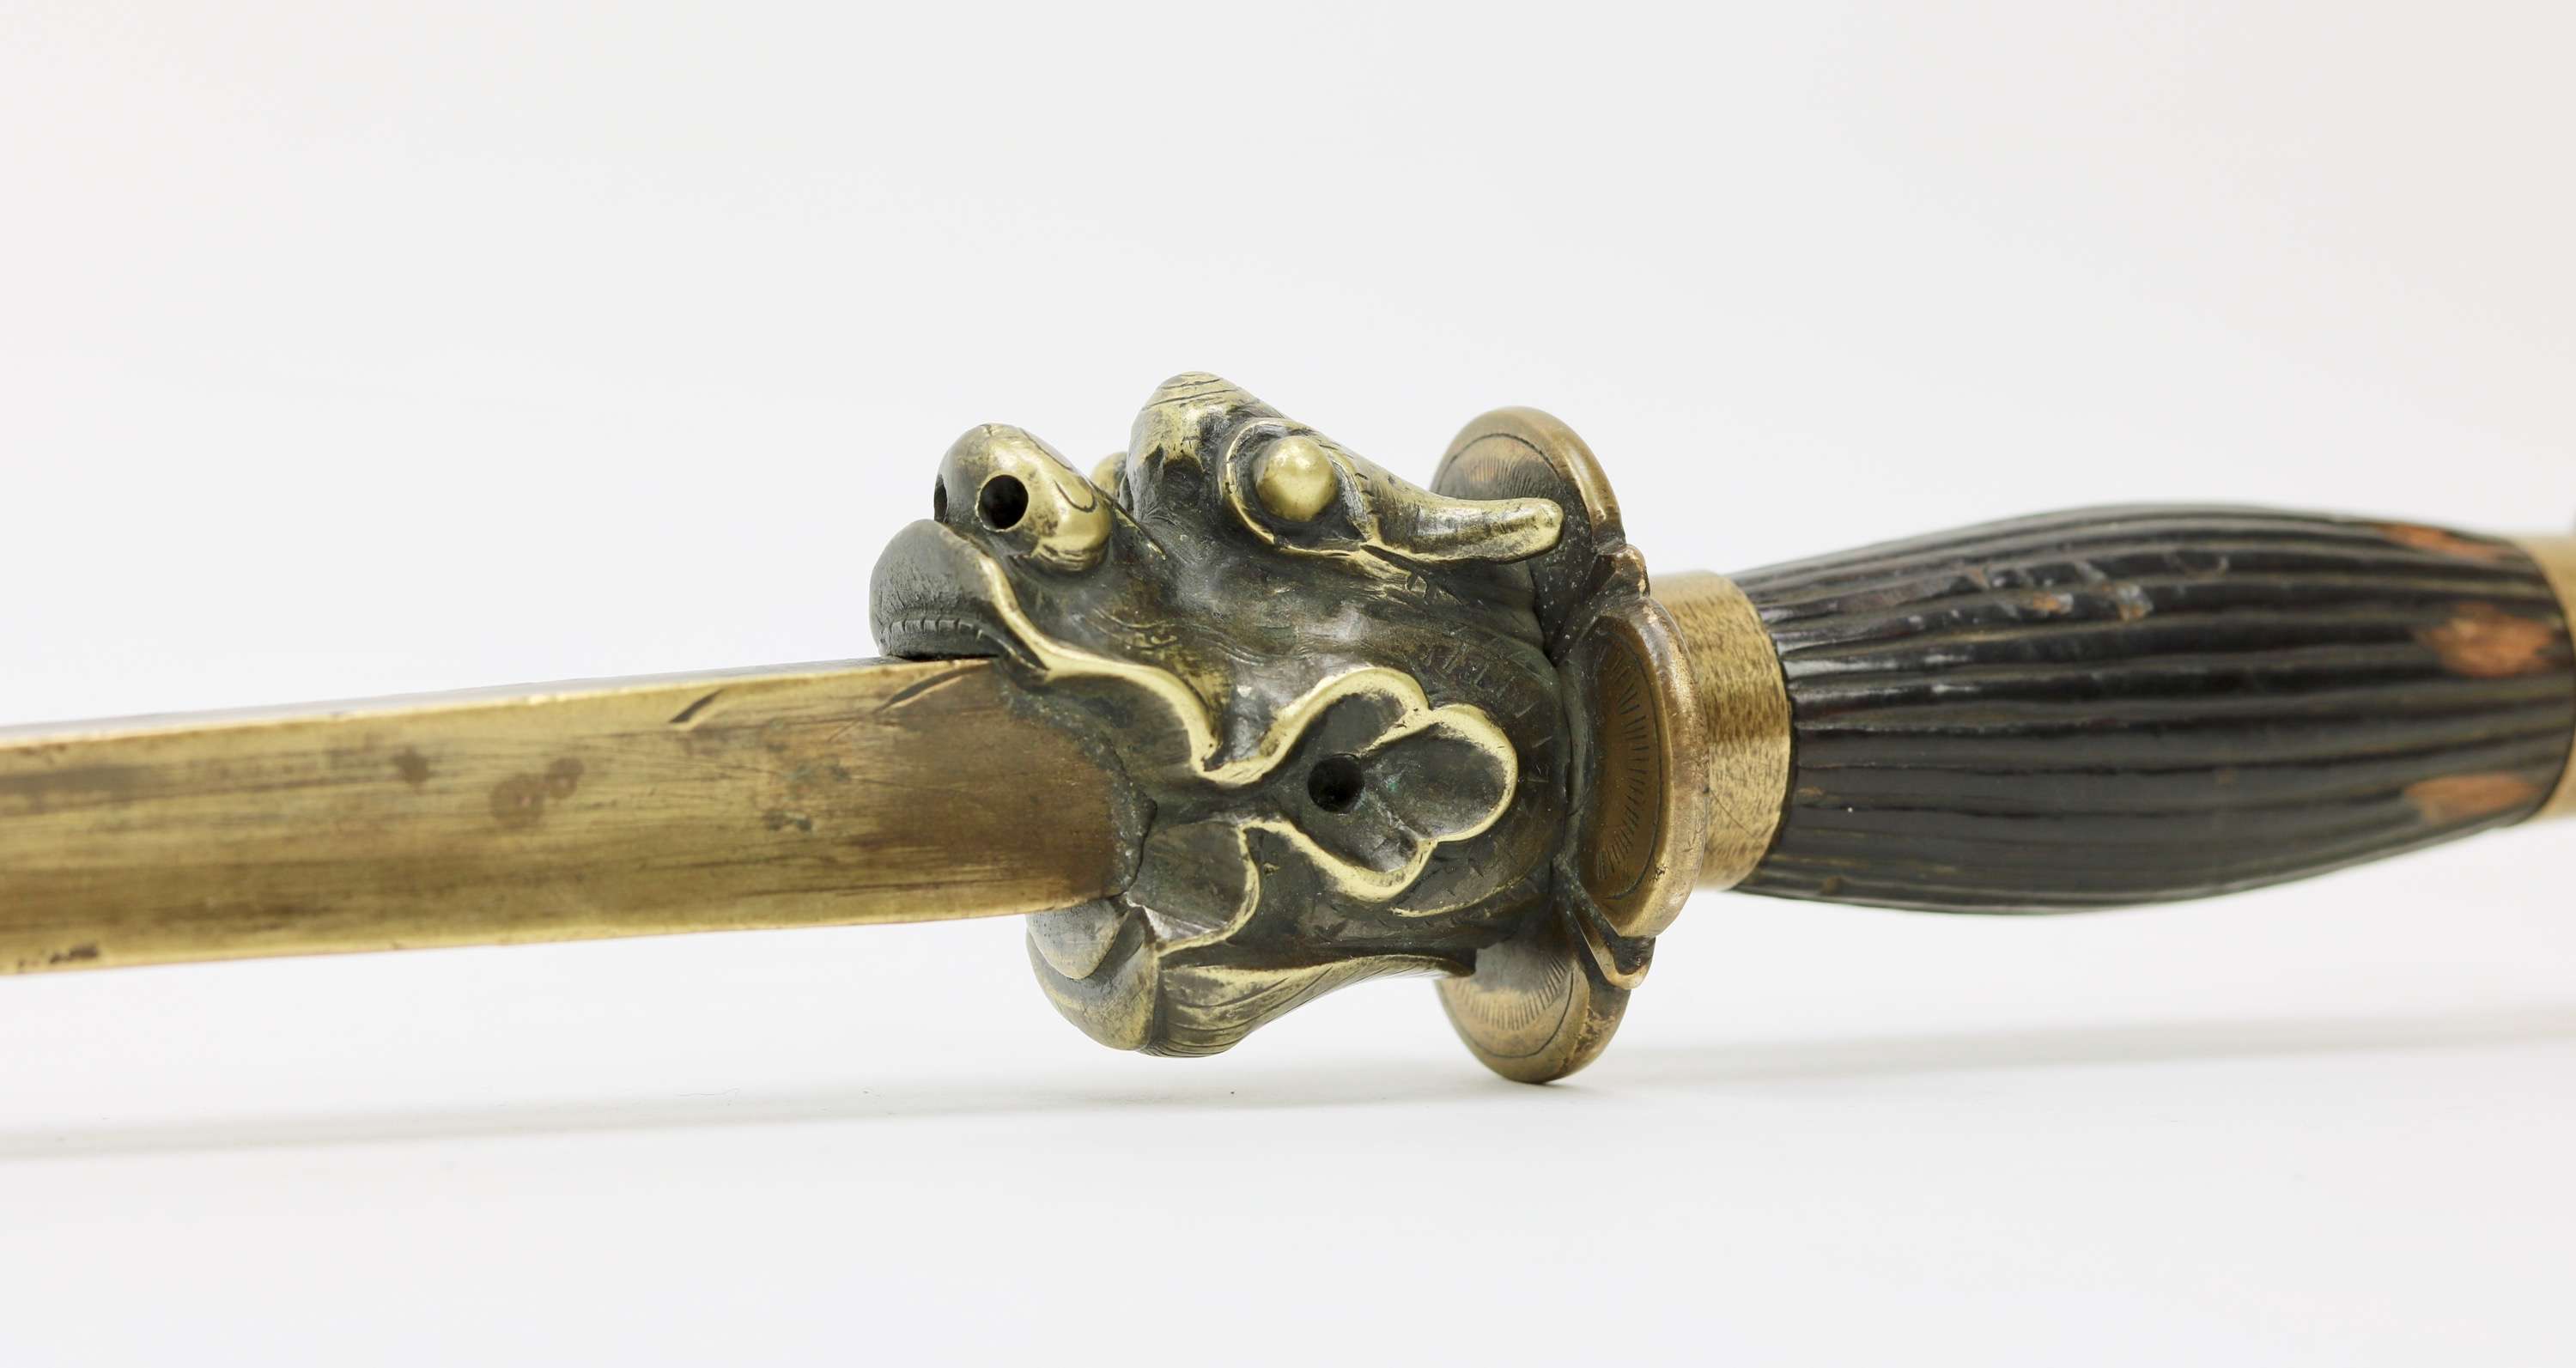 Chinese bronze mace (tongjian)